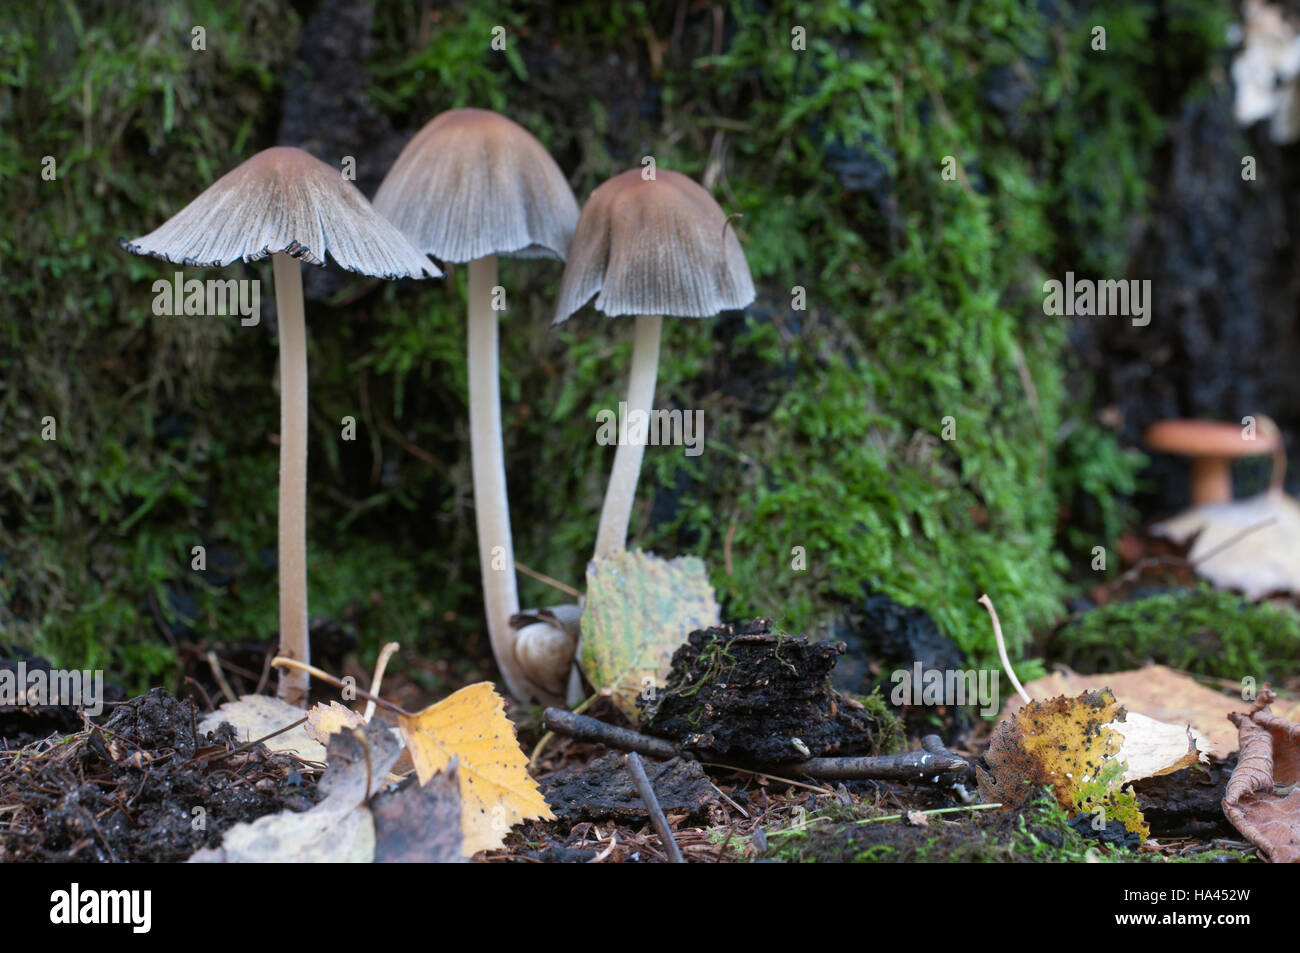 Coprinus atramentarius mushrooms, close up shot Stock Photo